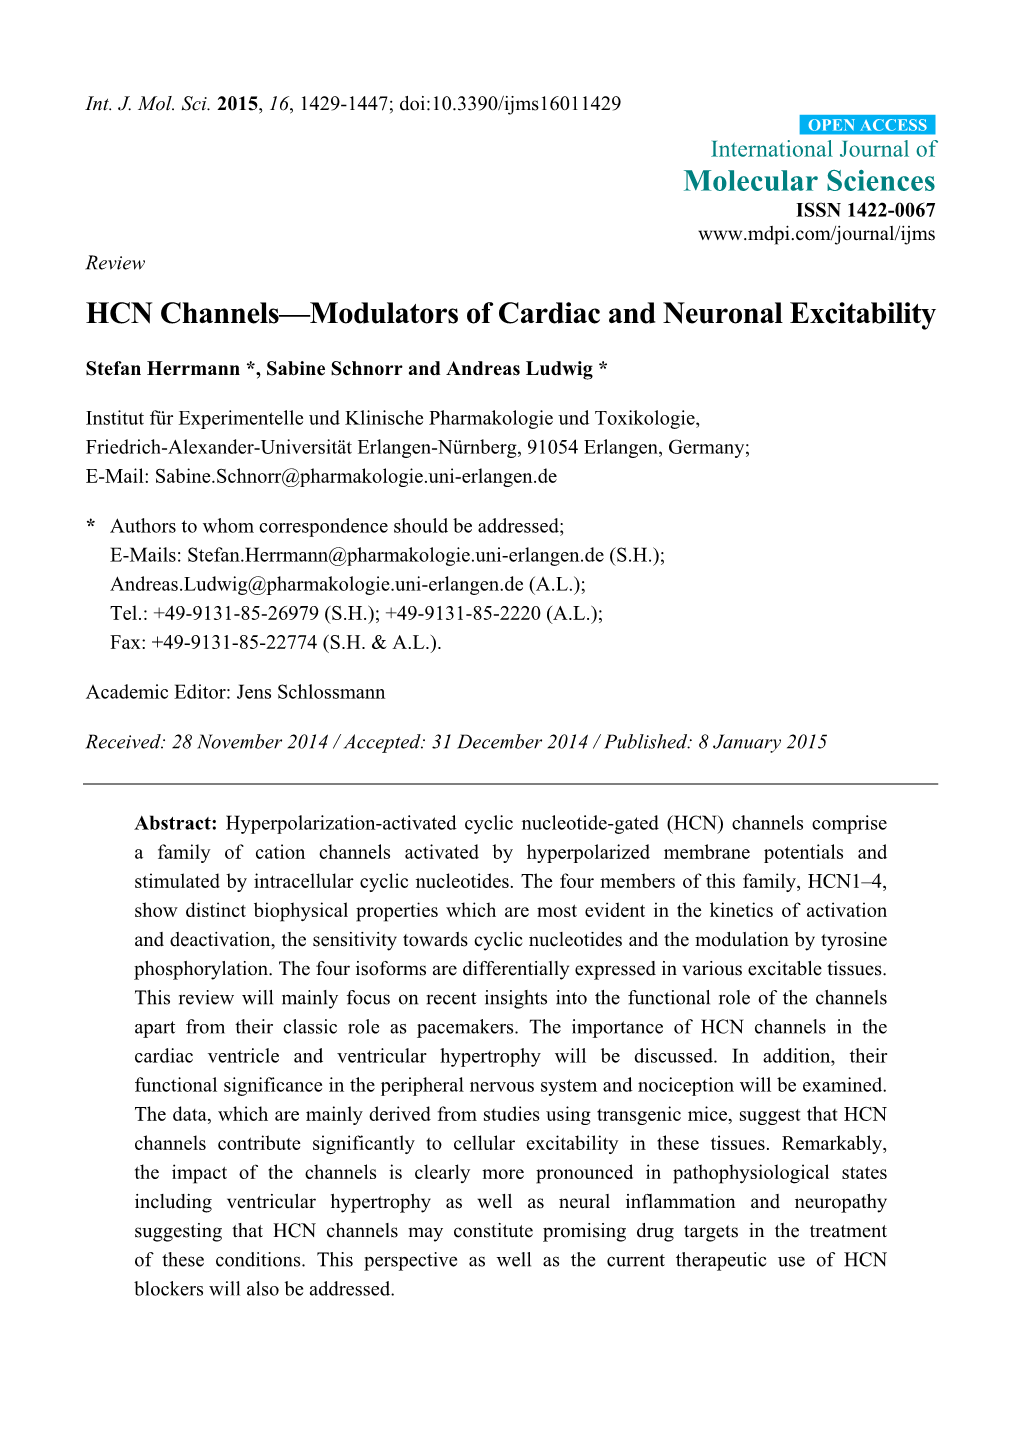 HCN Channels—Modulators of Cardiac and Neuronal Excitability